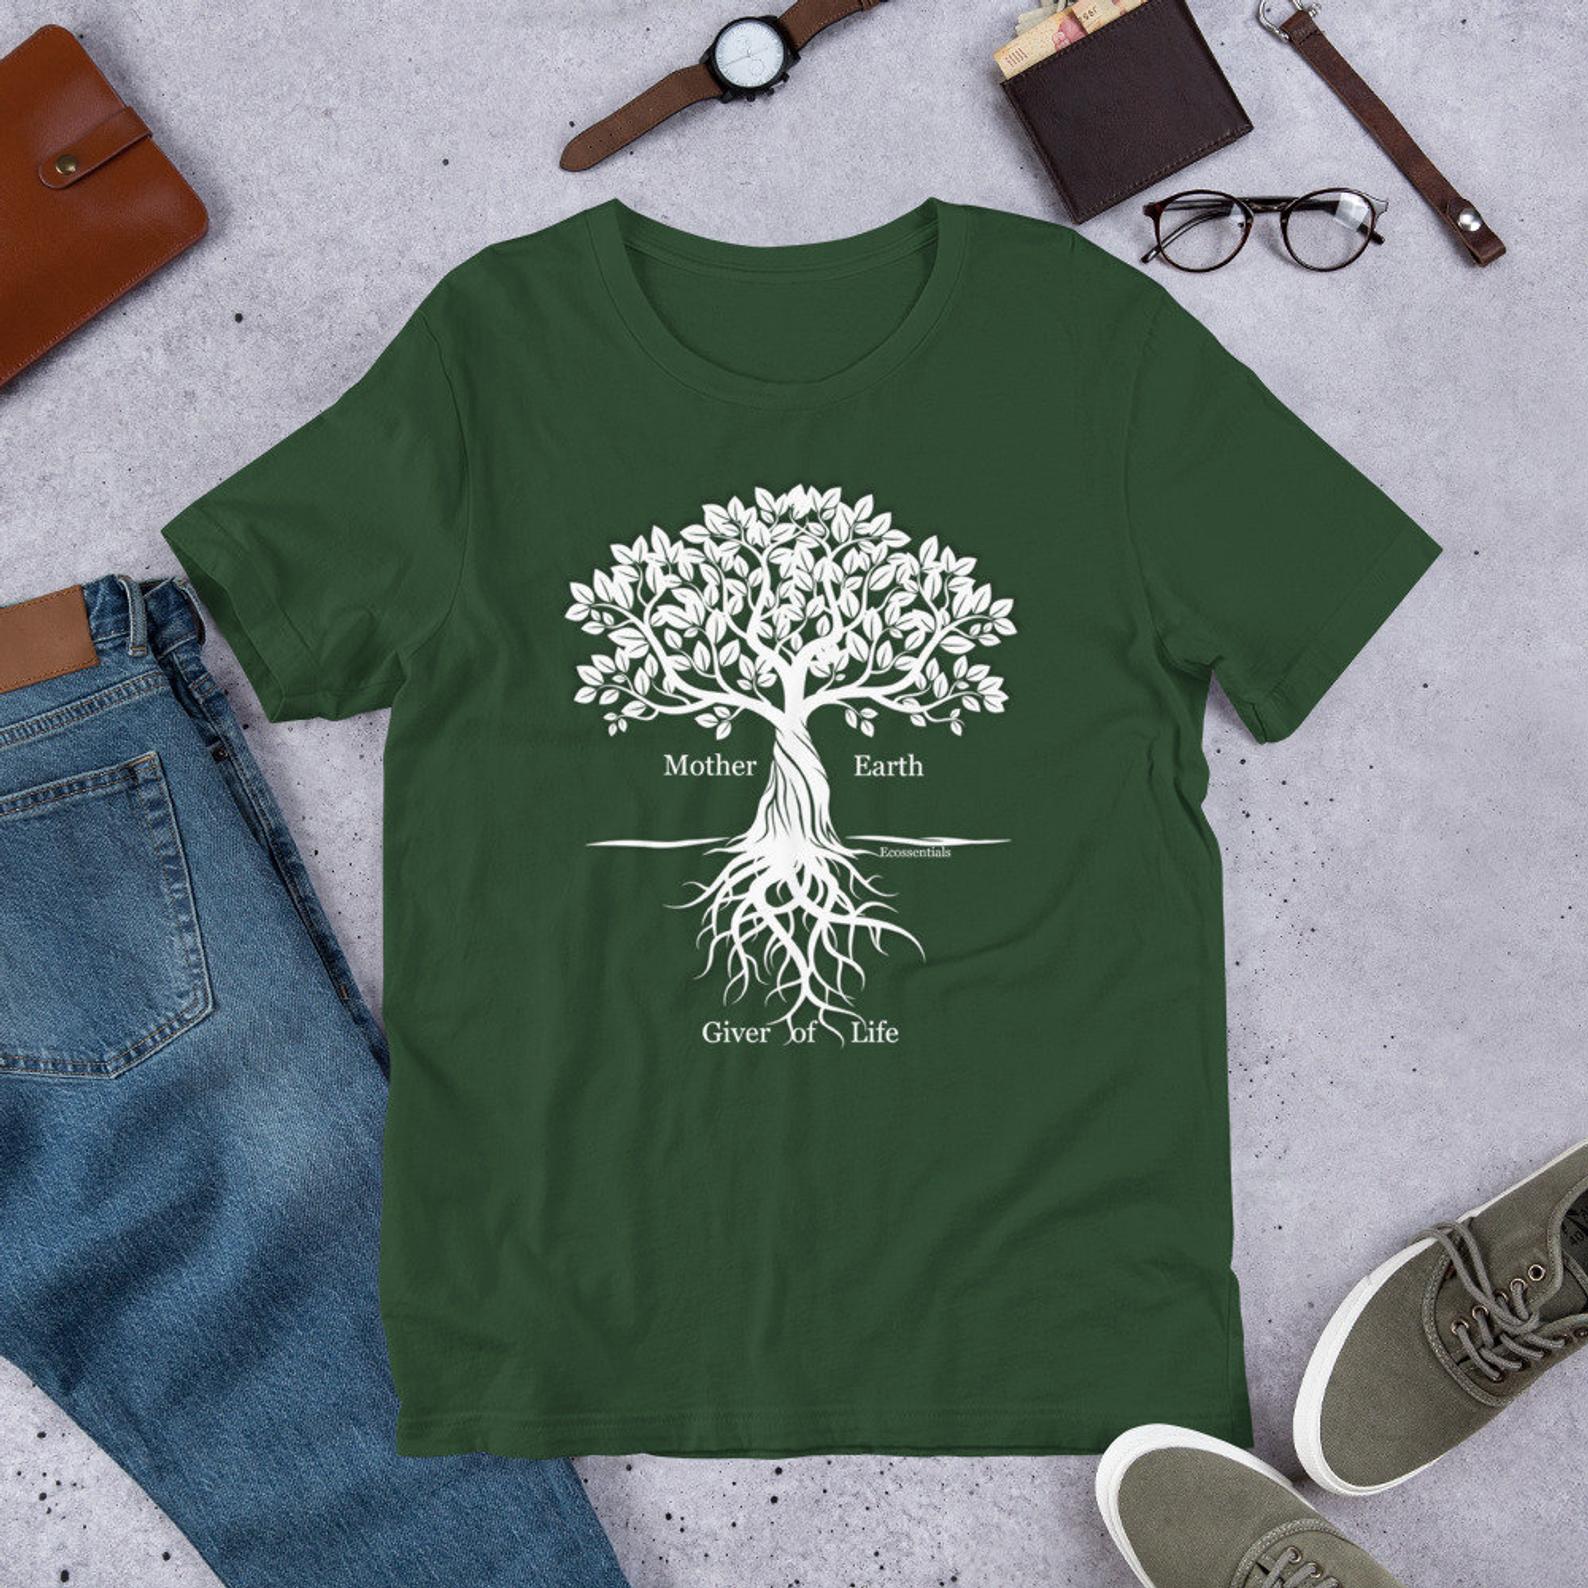 Tree of Life - an universal symbol beyond fashion trend